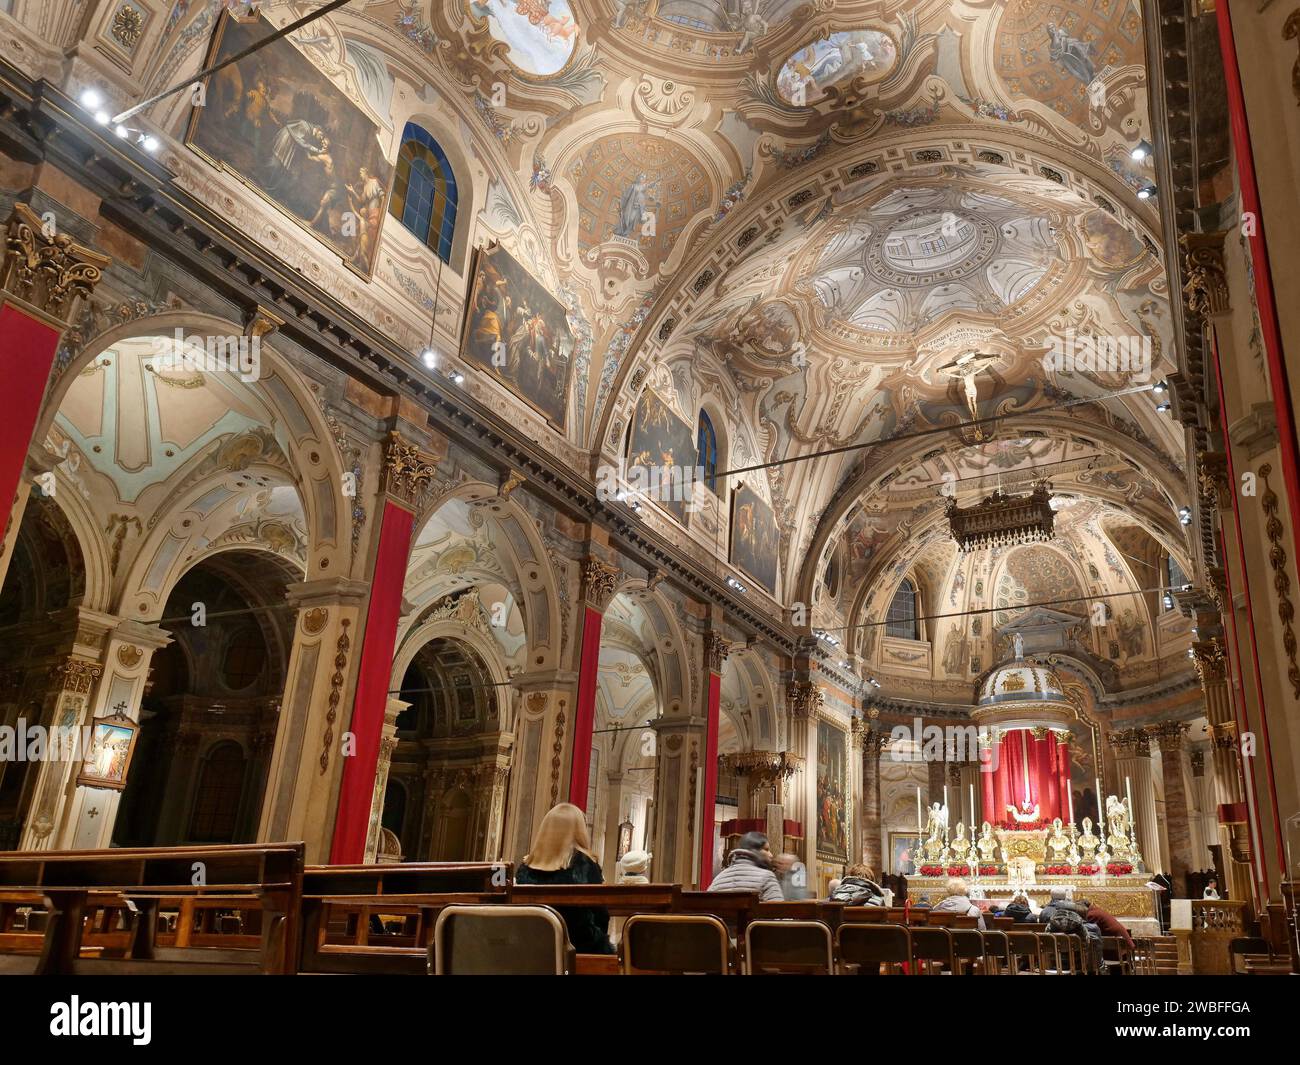 Interieur of San Martino basilic in Treviglio, Bergamo, Italy Stock Photo